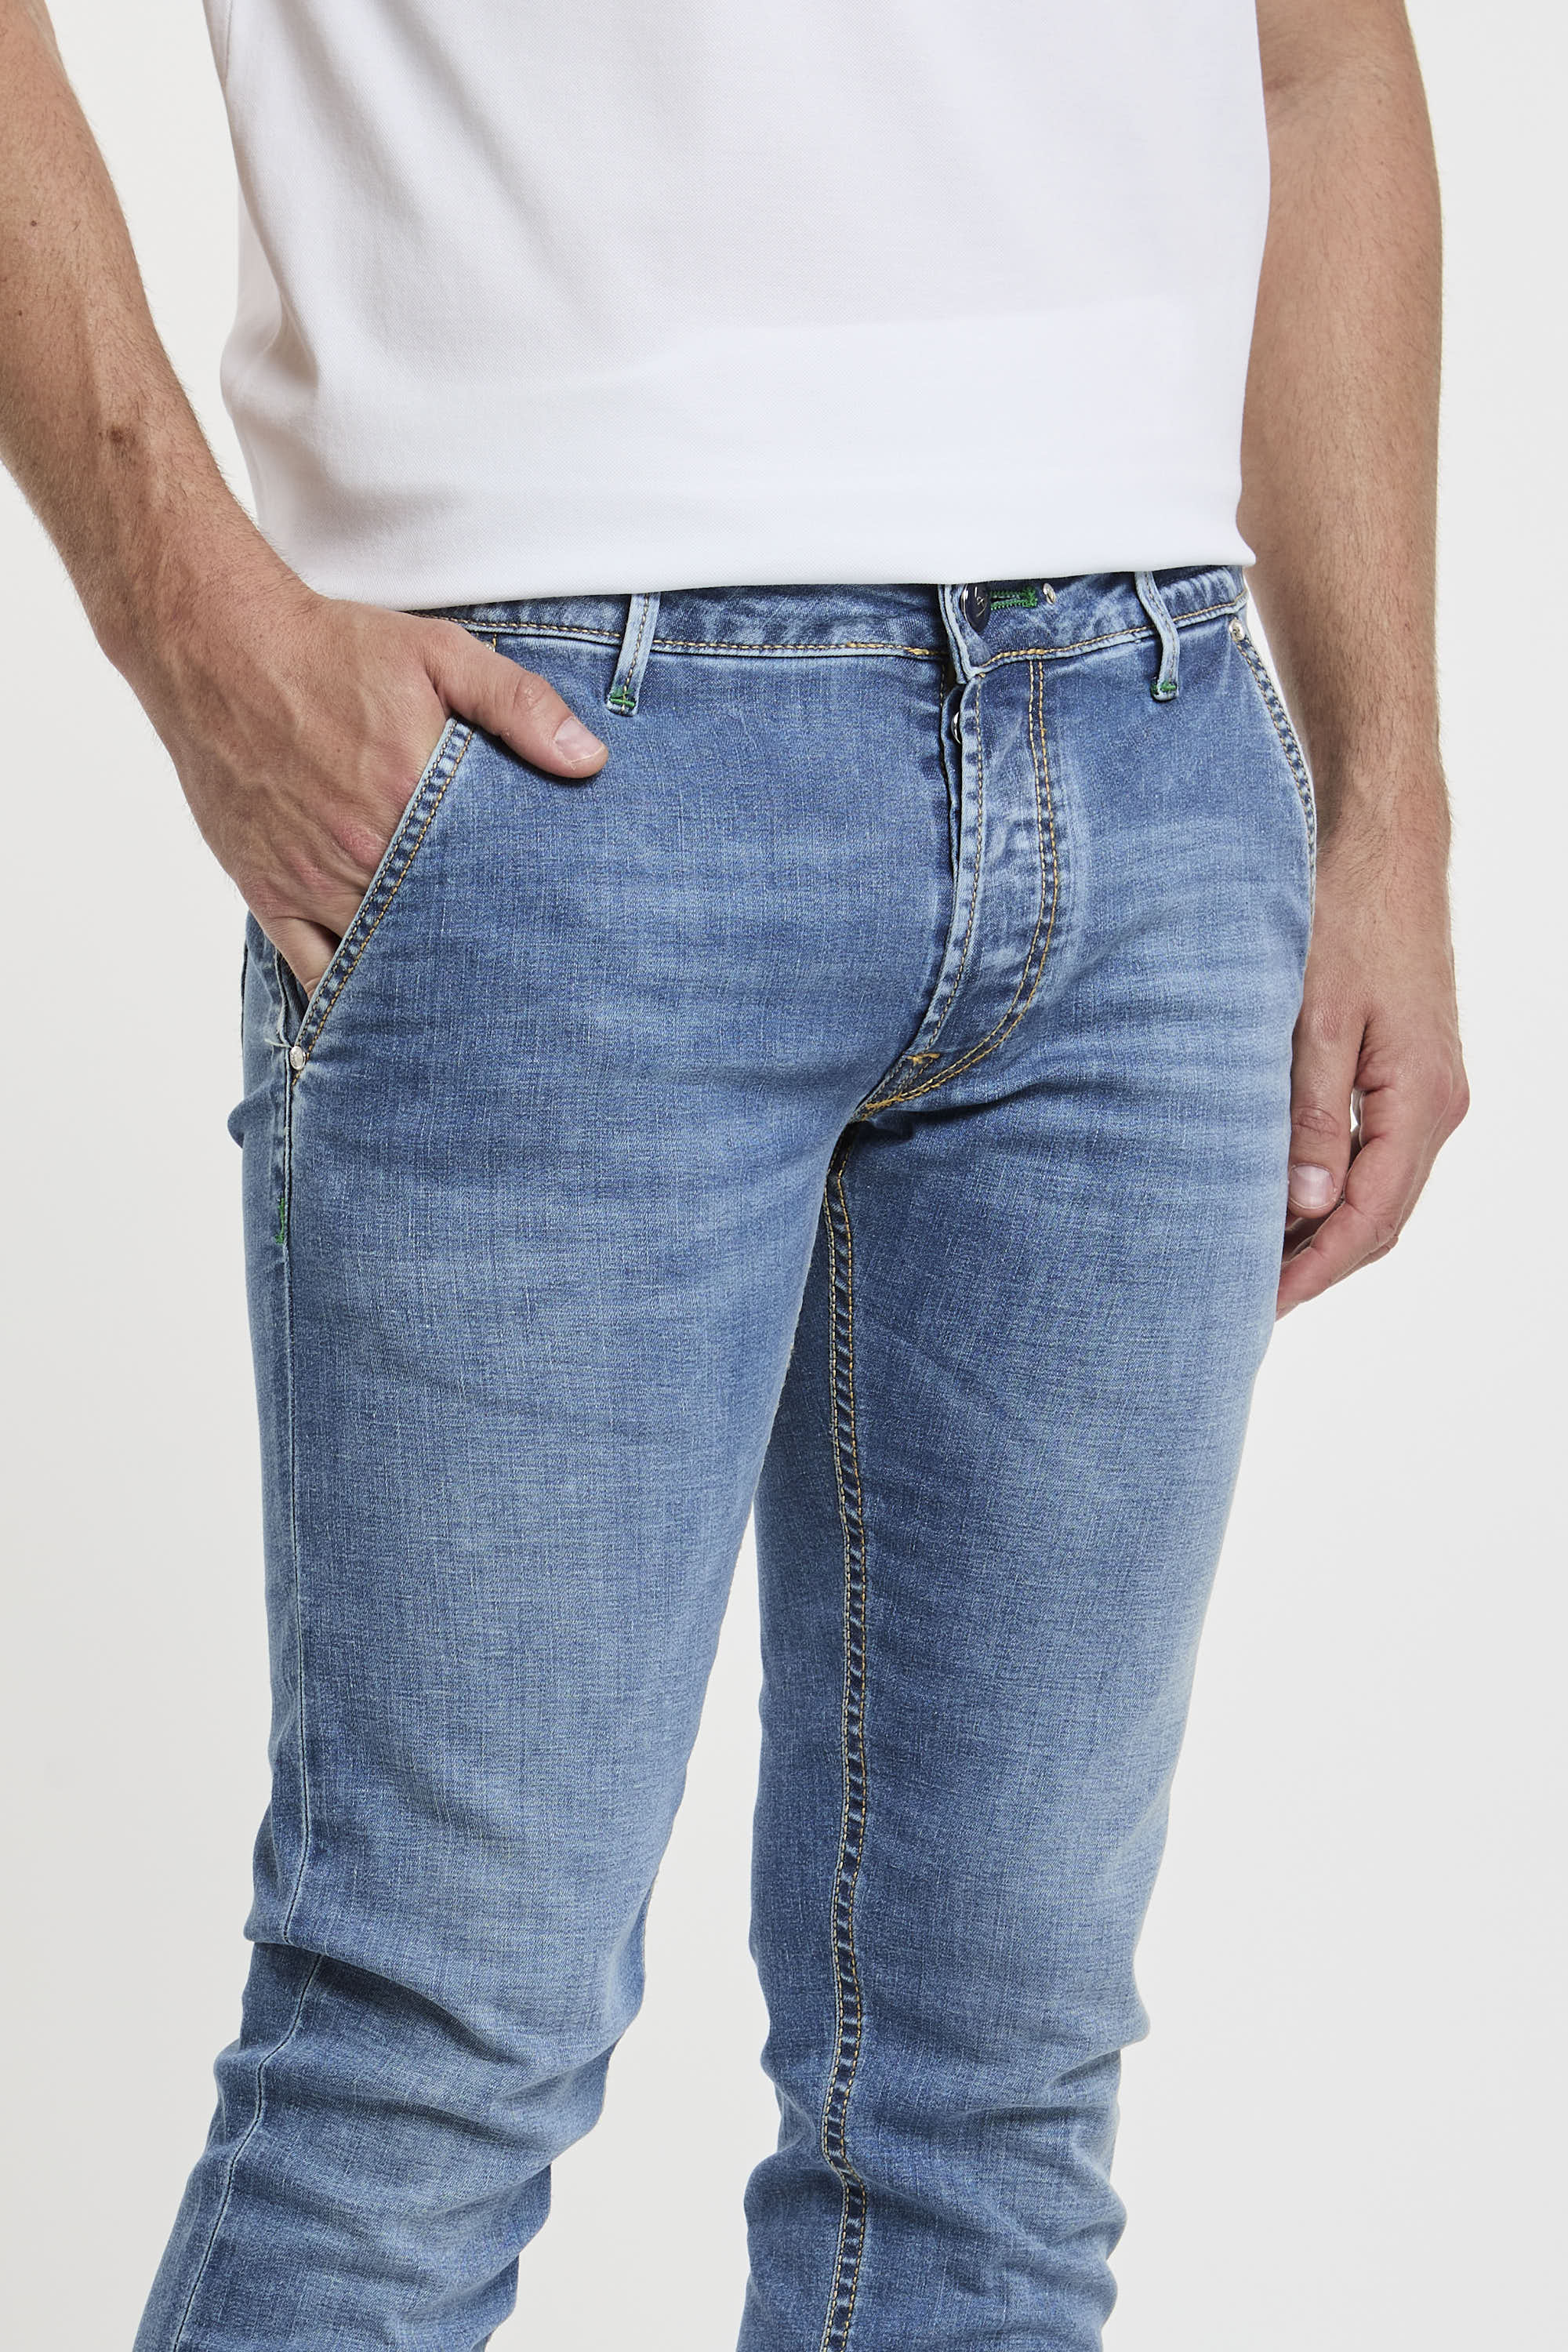 Handpicked Jeans Parma in Cotton Denim-4